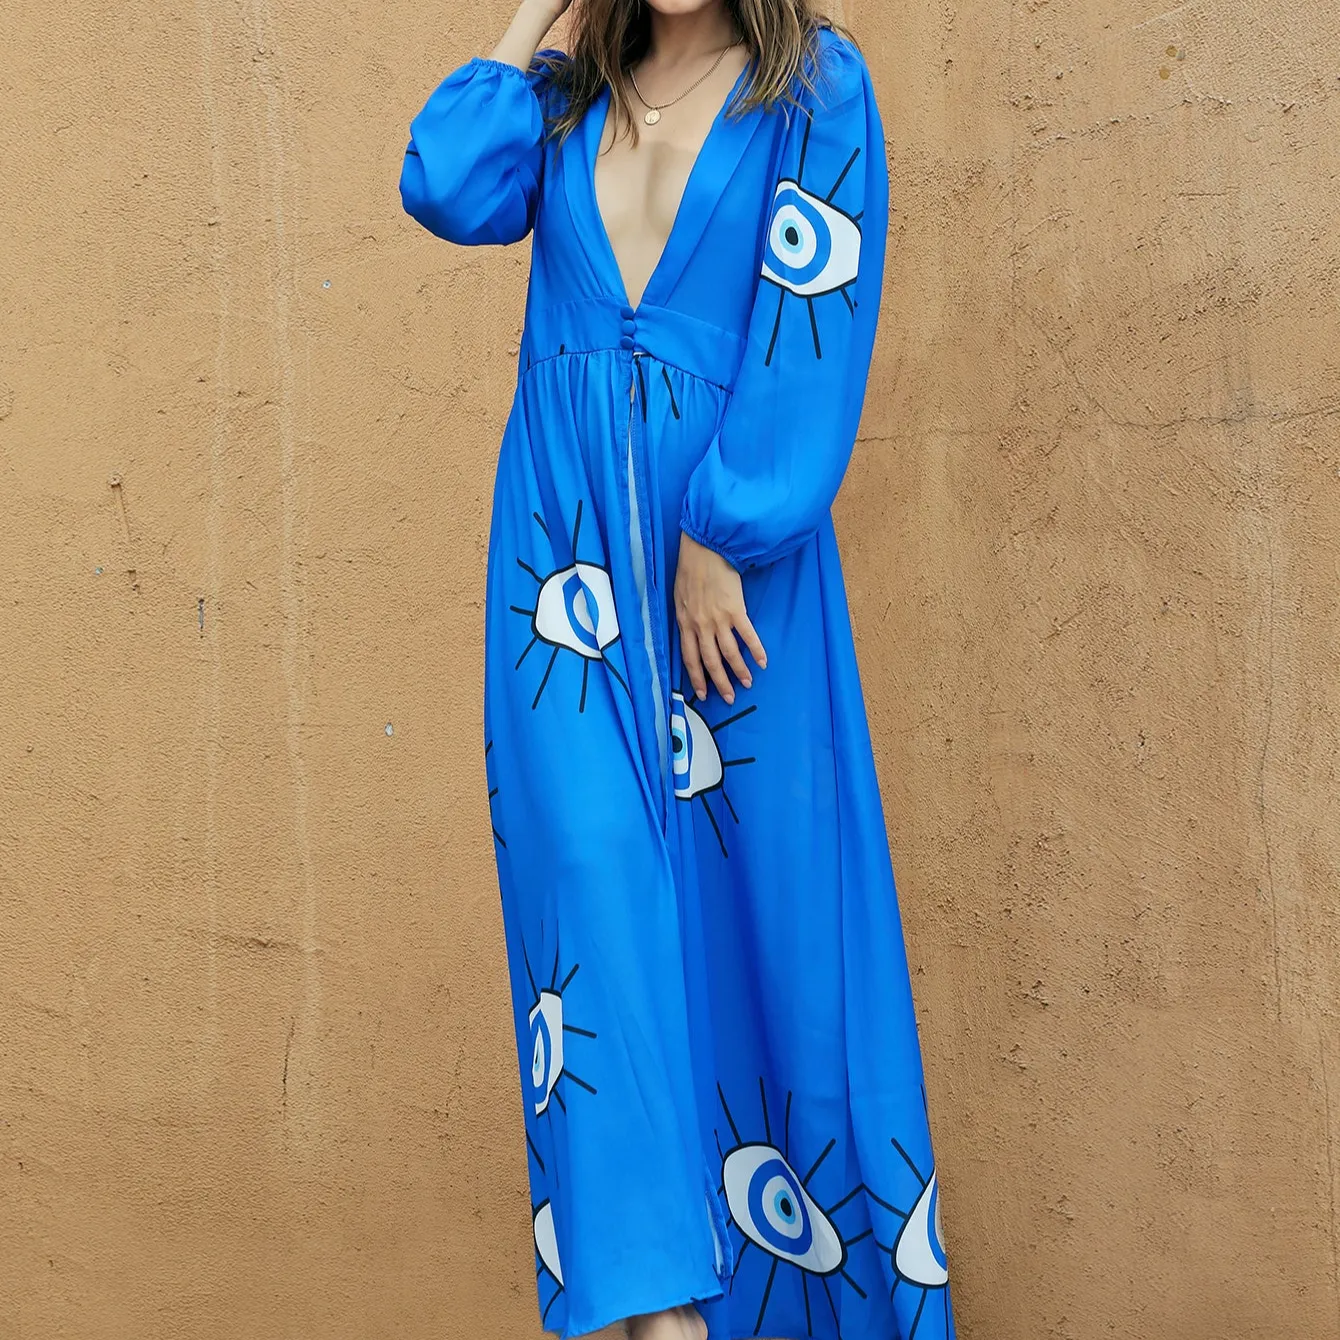 VIETNAM SUPPLIER FACTORY MADE OEM ODM CLOTHING WHOLESALE WOMEN'S BLUE EYES CHIFFON BEACH DRESS